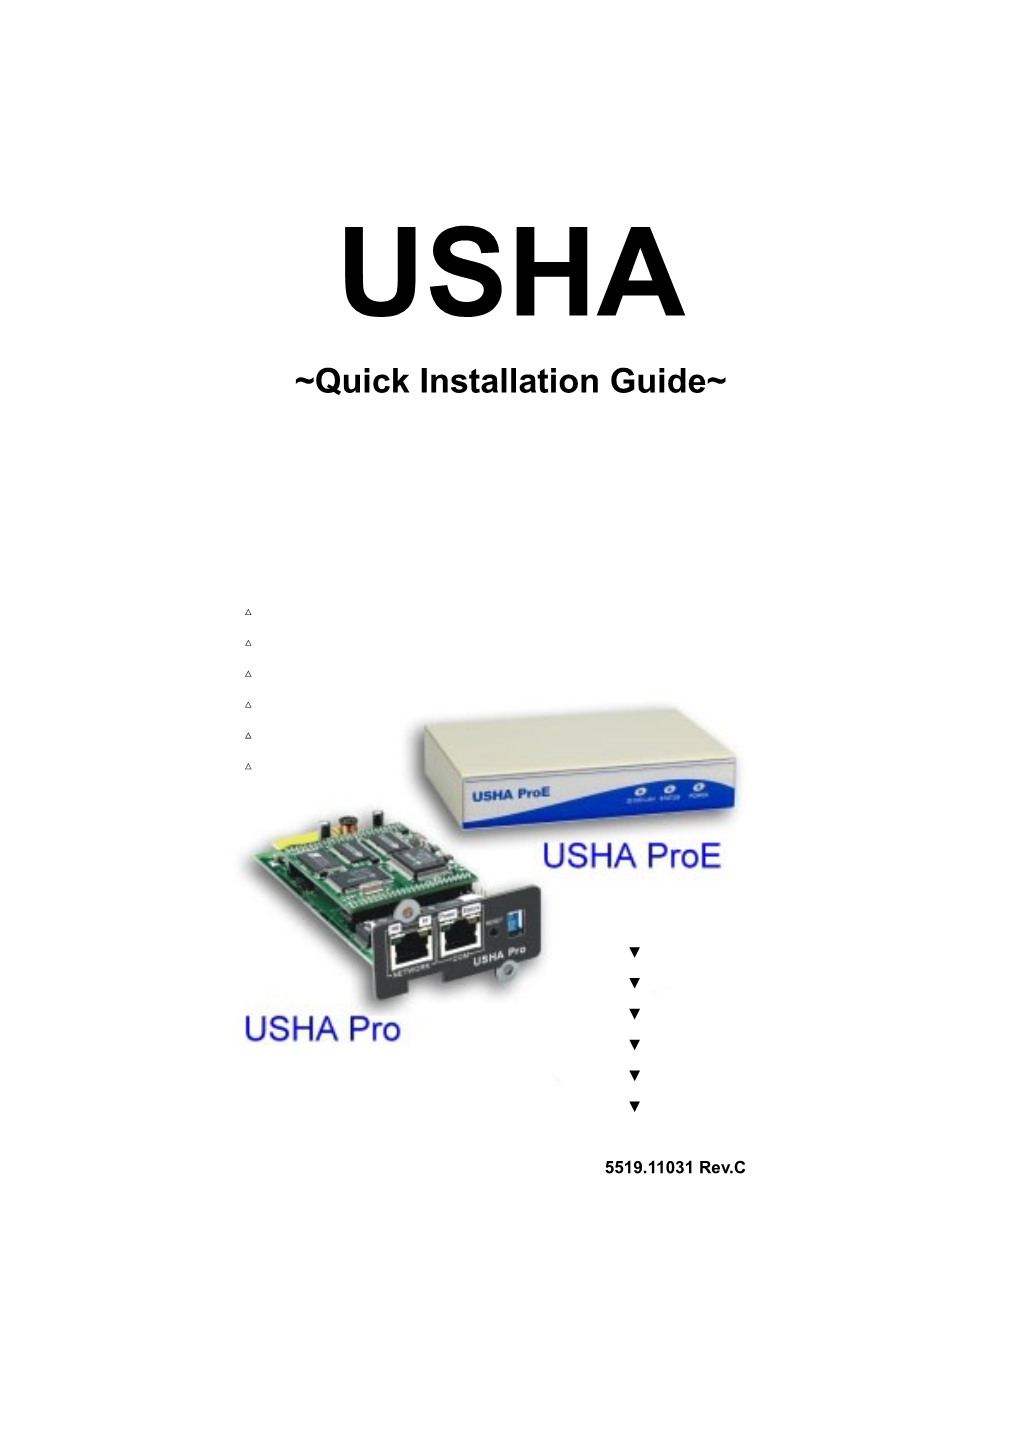 USHA Quick Installation Guide